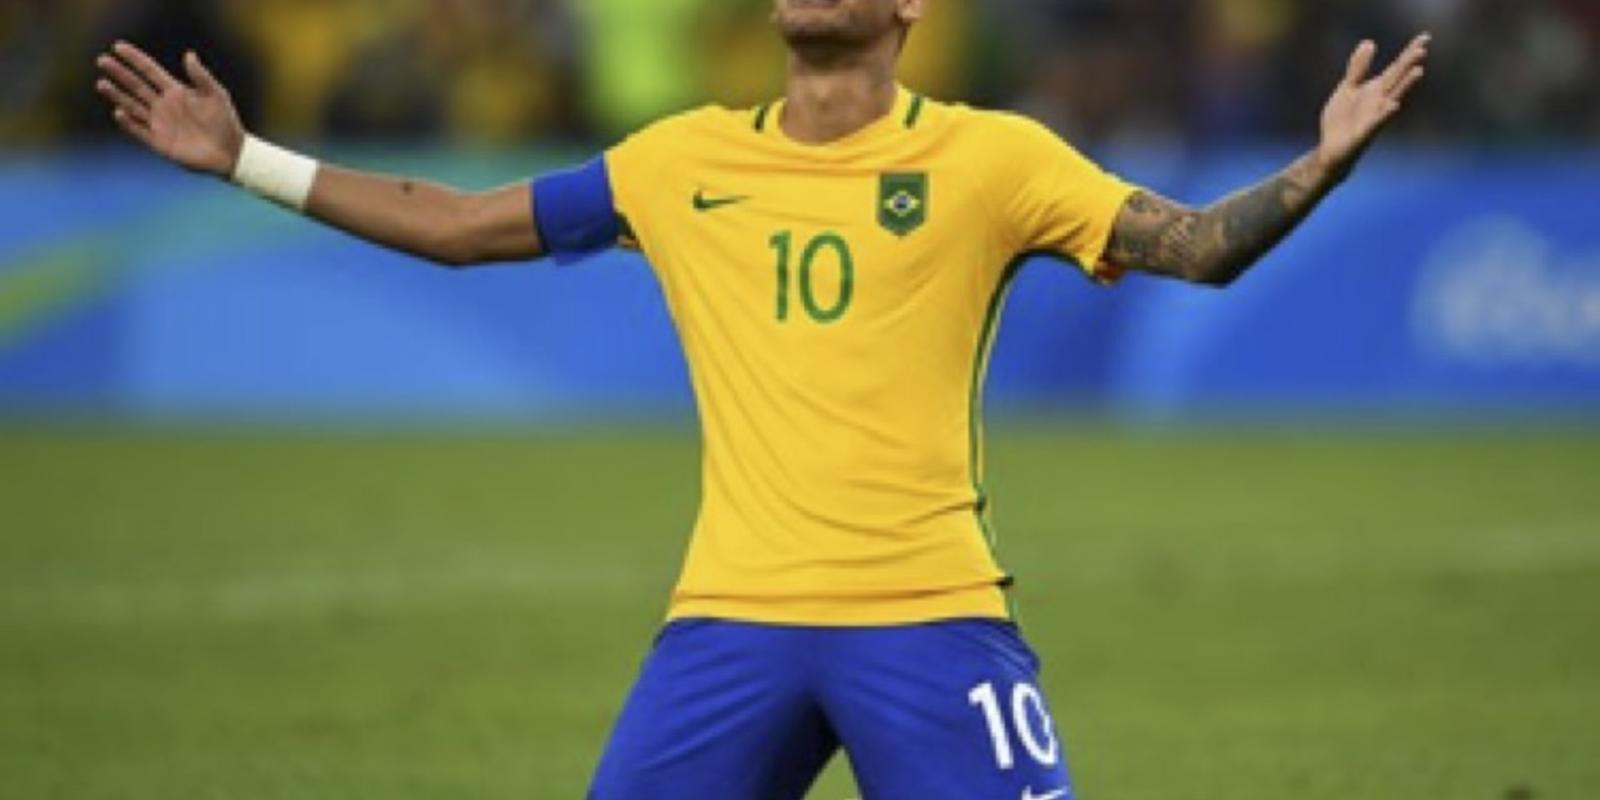 Brazil soccer player